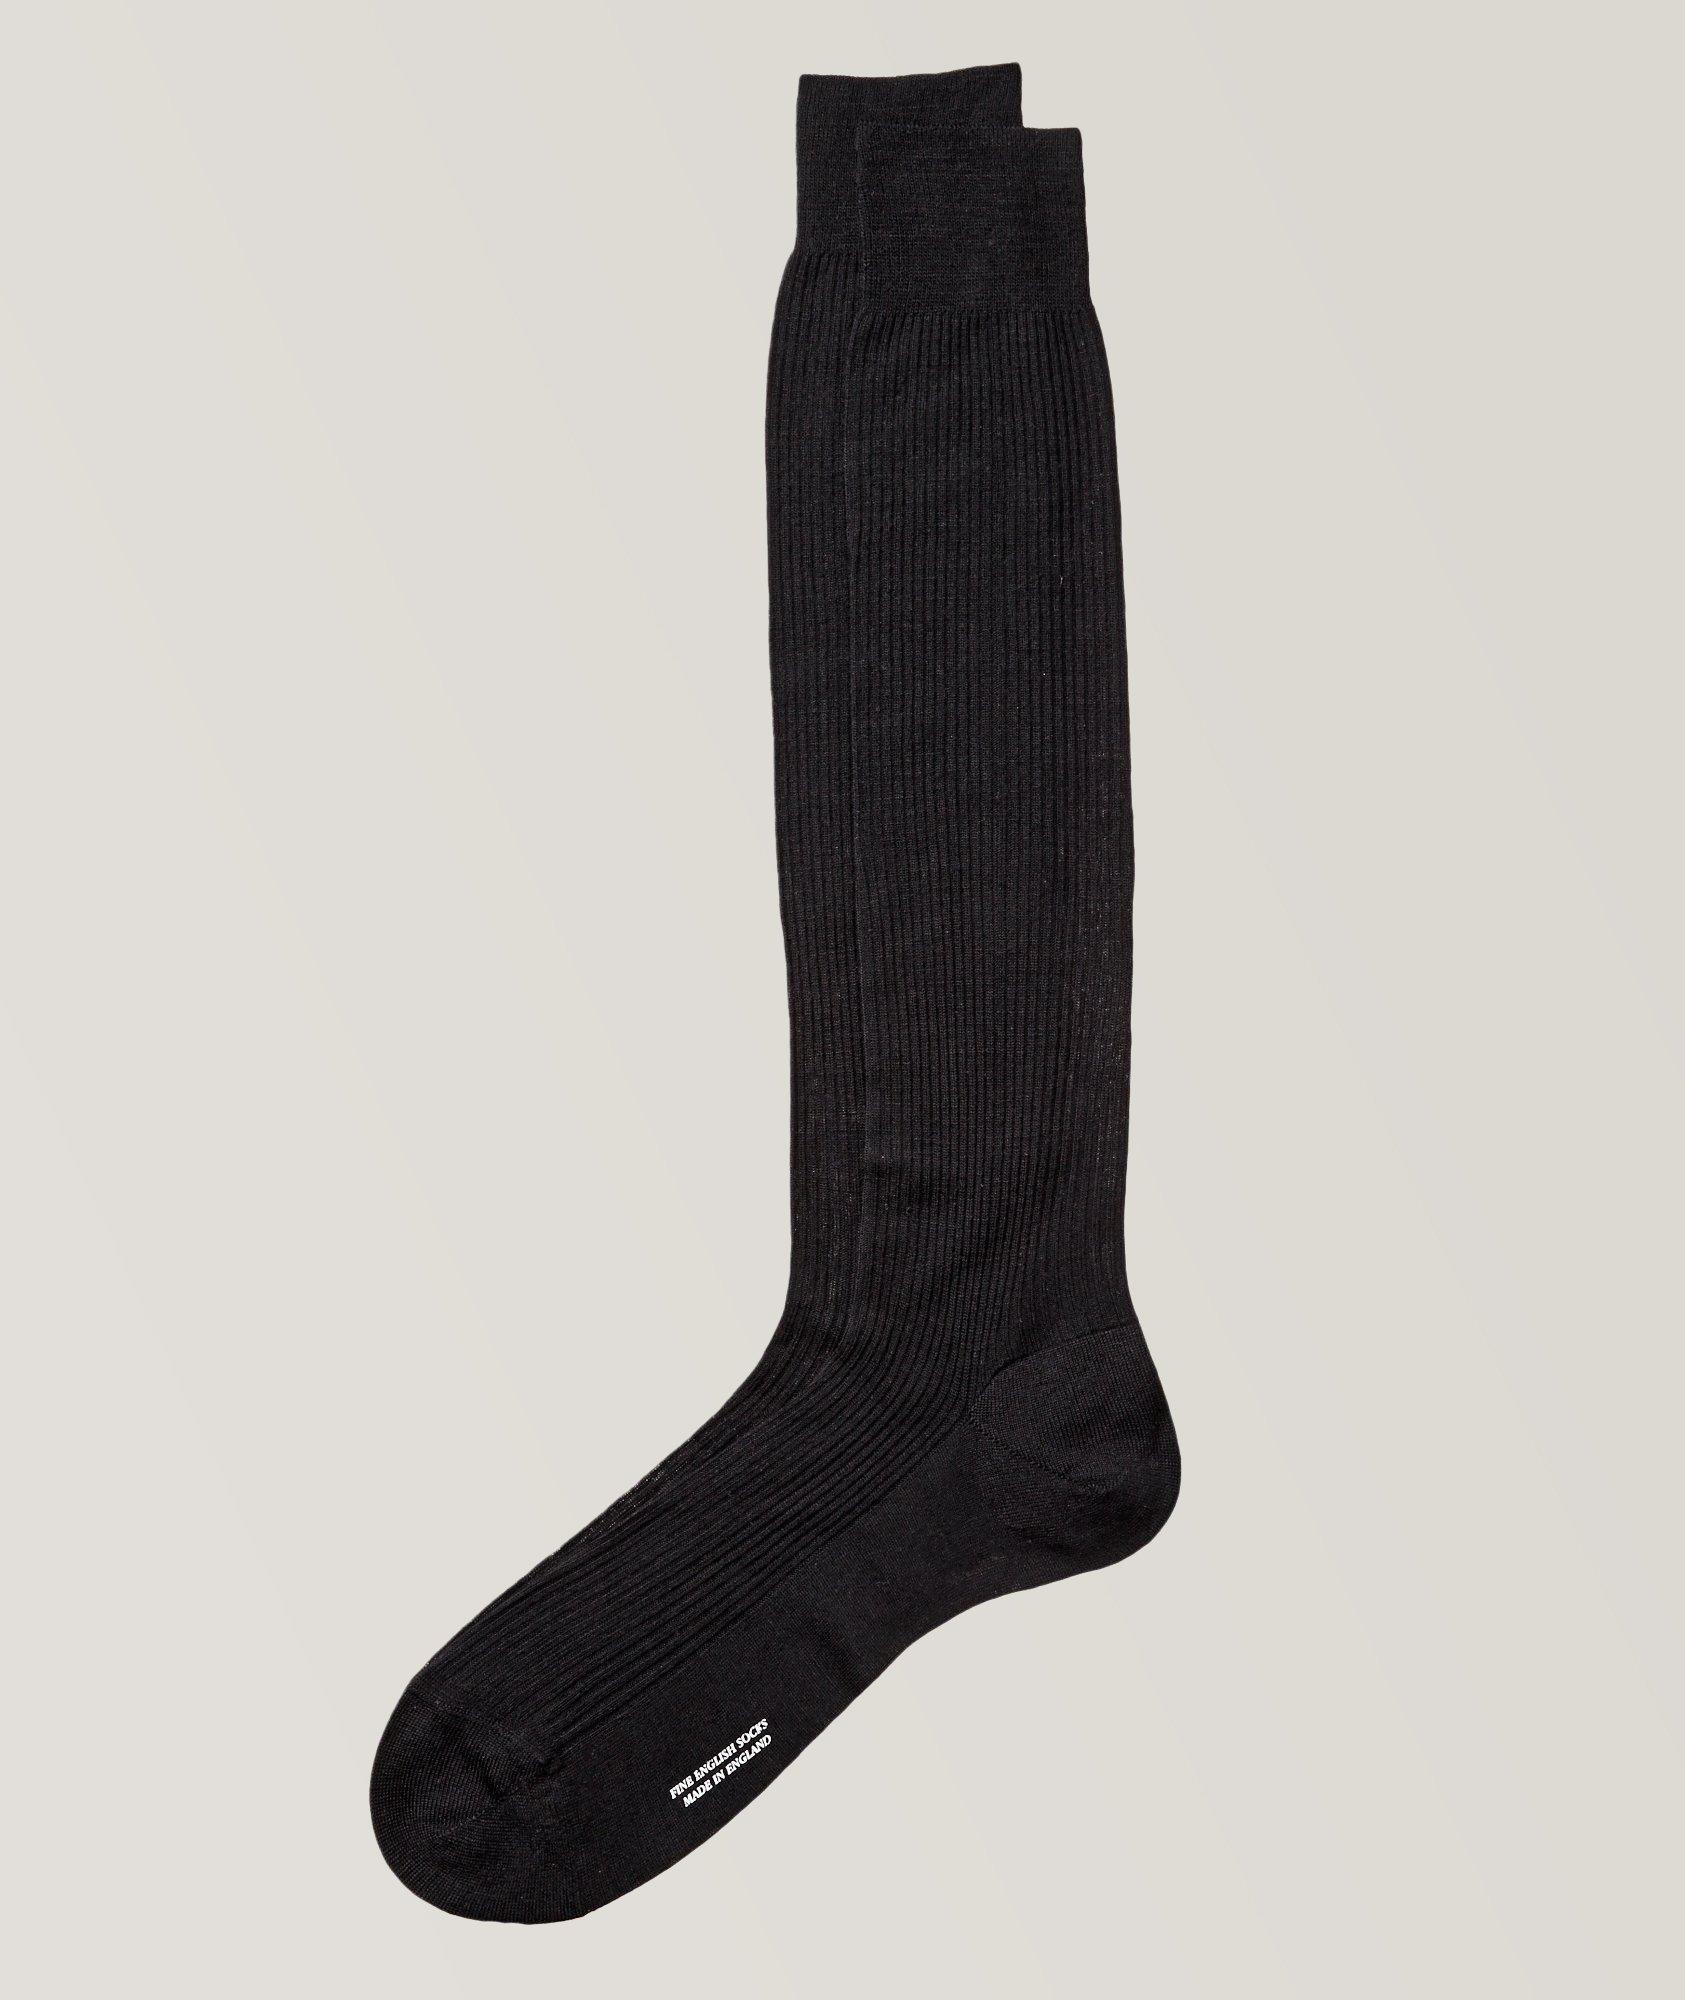 Merino Wool Socks image 0